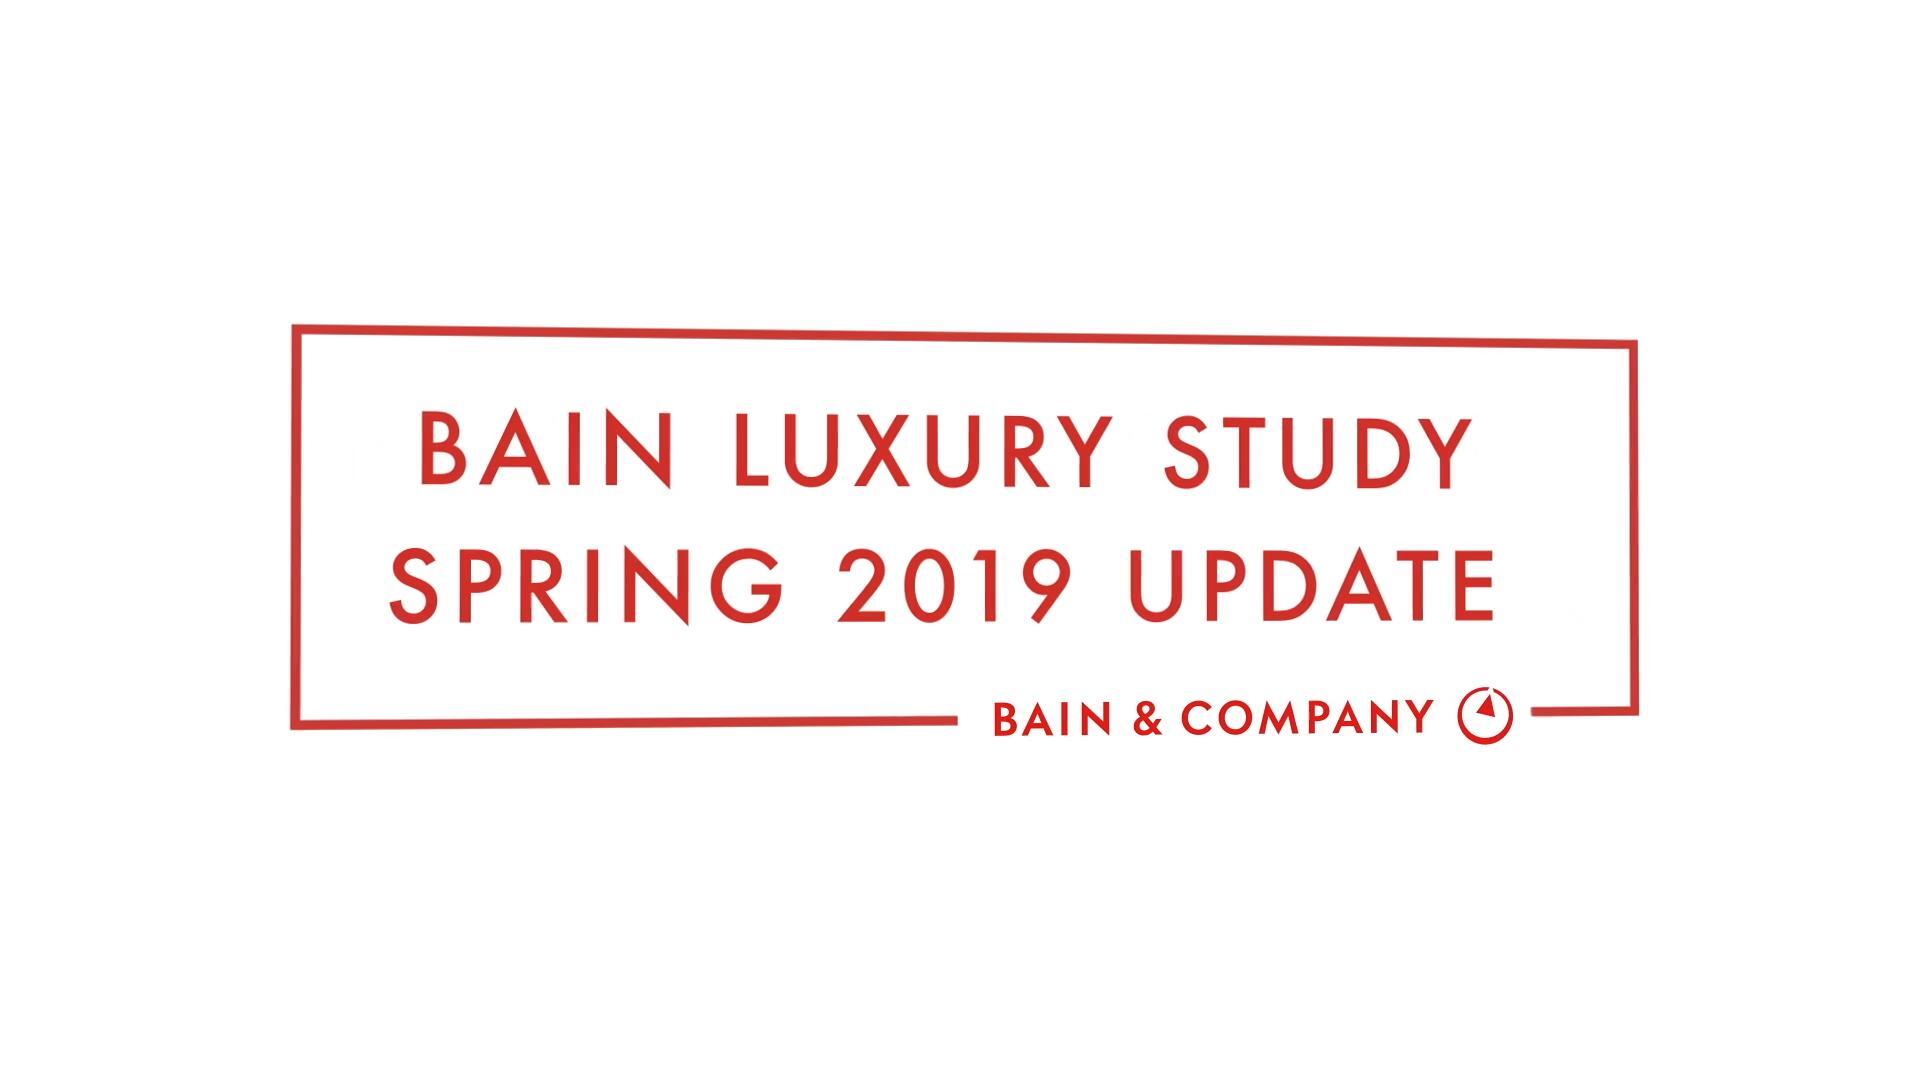 Bain & Company study underlines strength of luxury market rebound